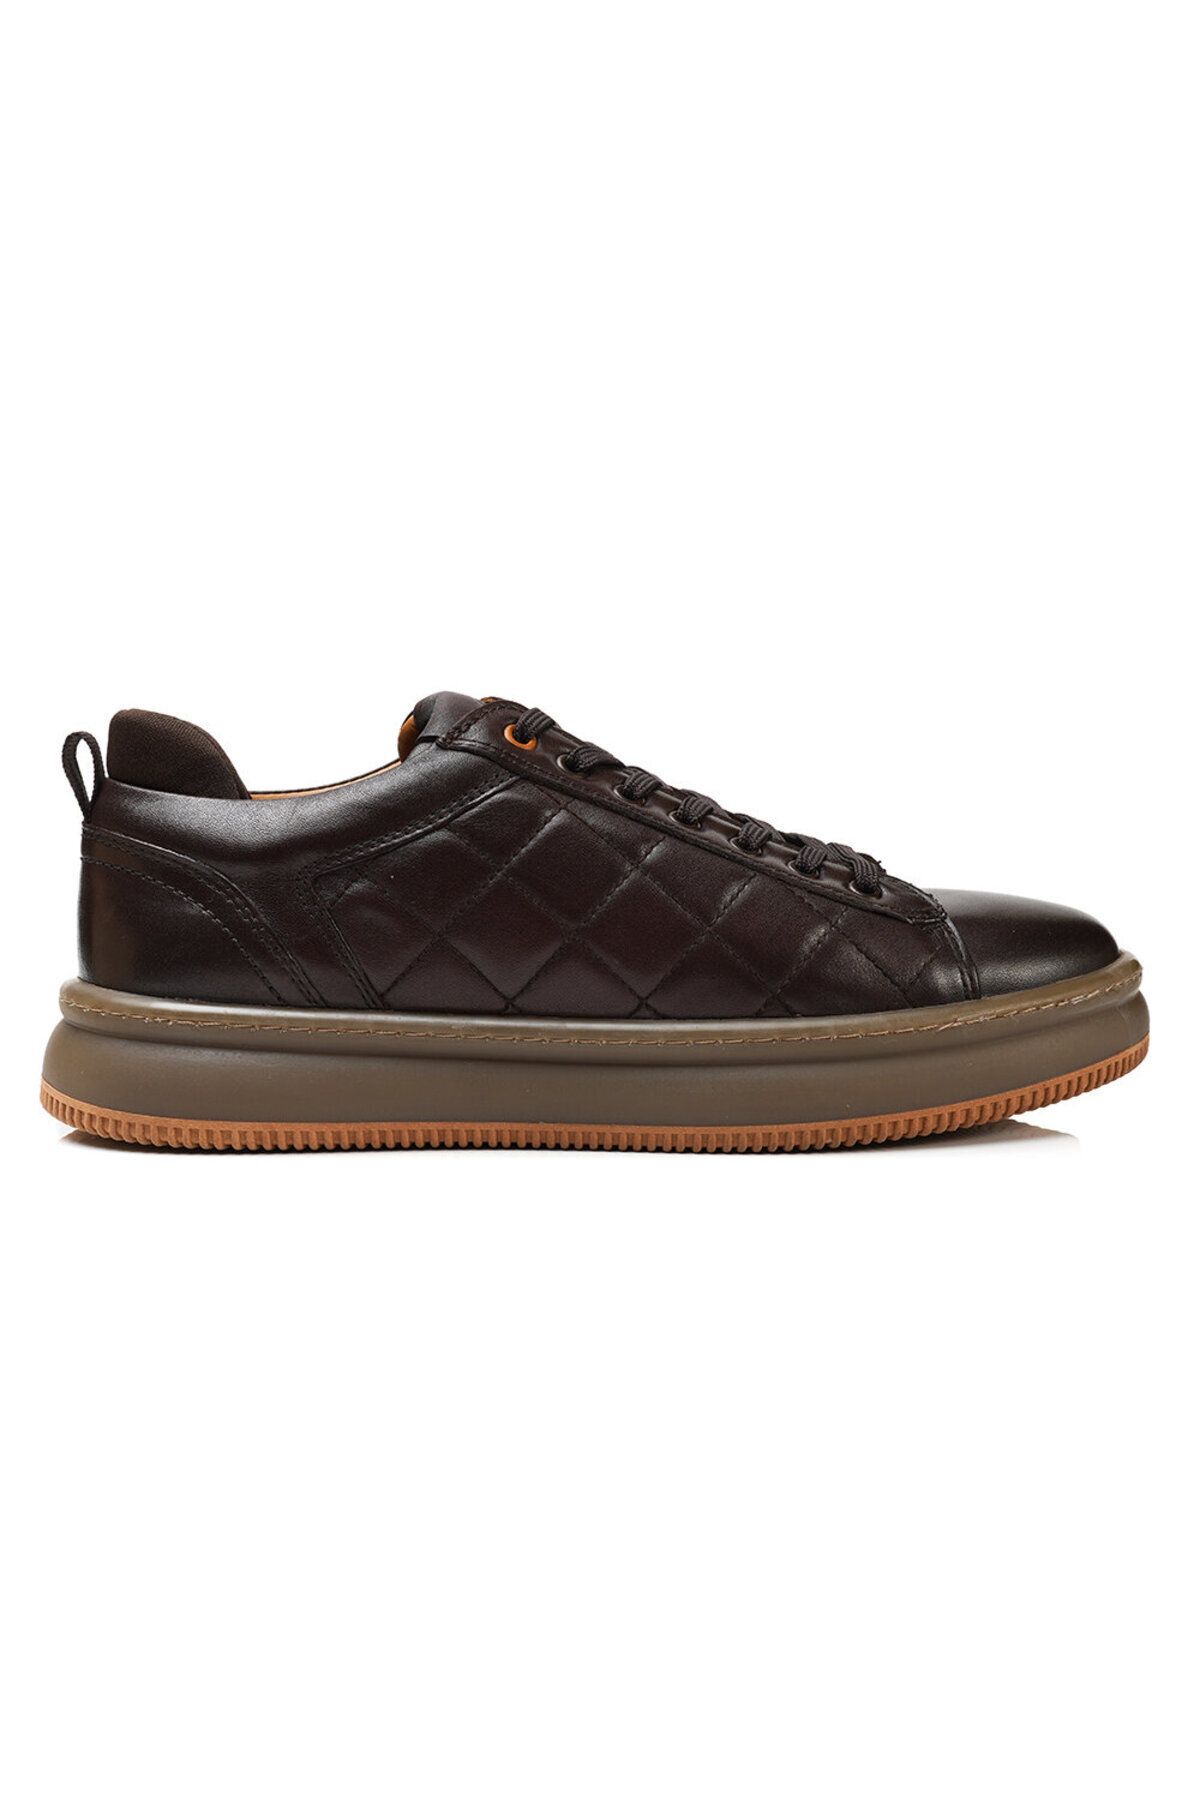 Greyder Erkek Kahverengi Hakiki Deri Sneaker Ayakkabı 3k1sa16381